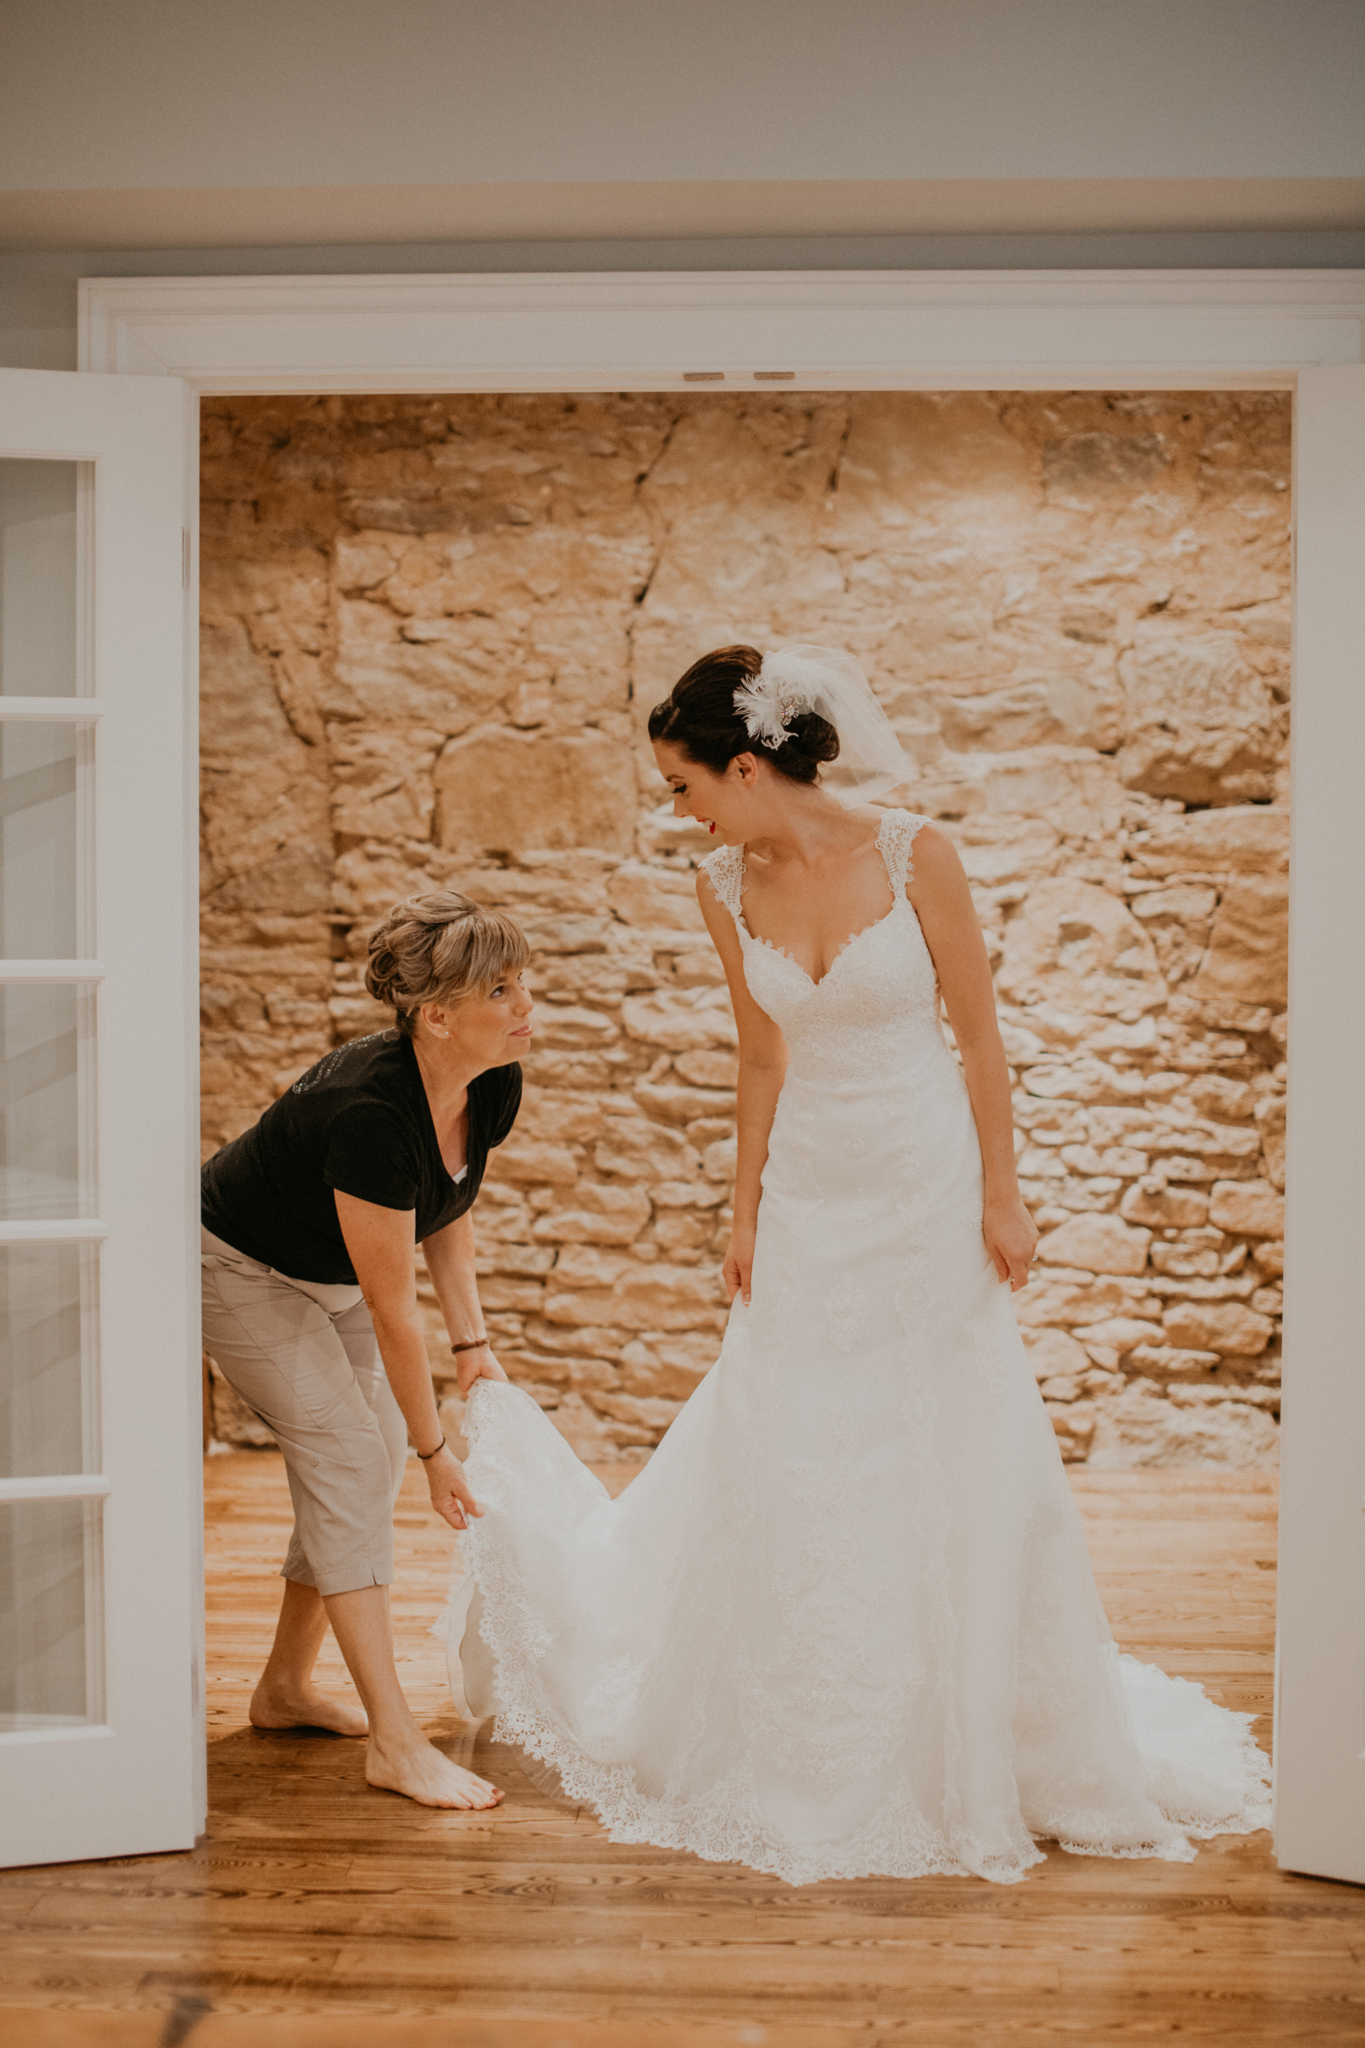 Mother of bride helps bride put on wedding dress